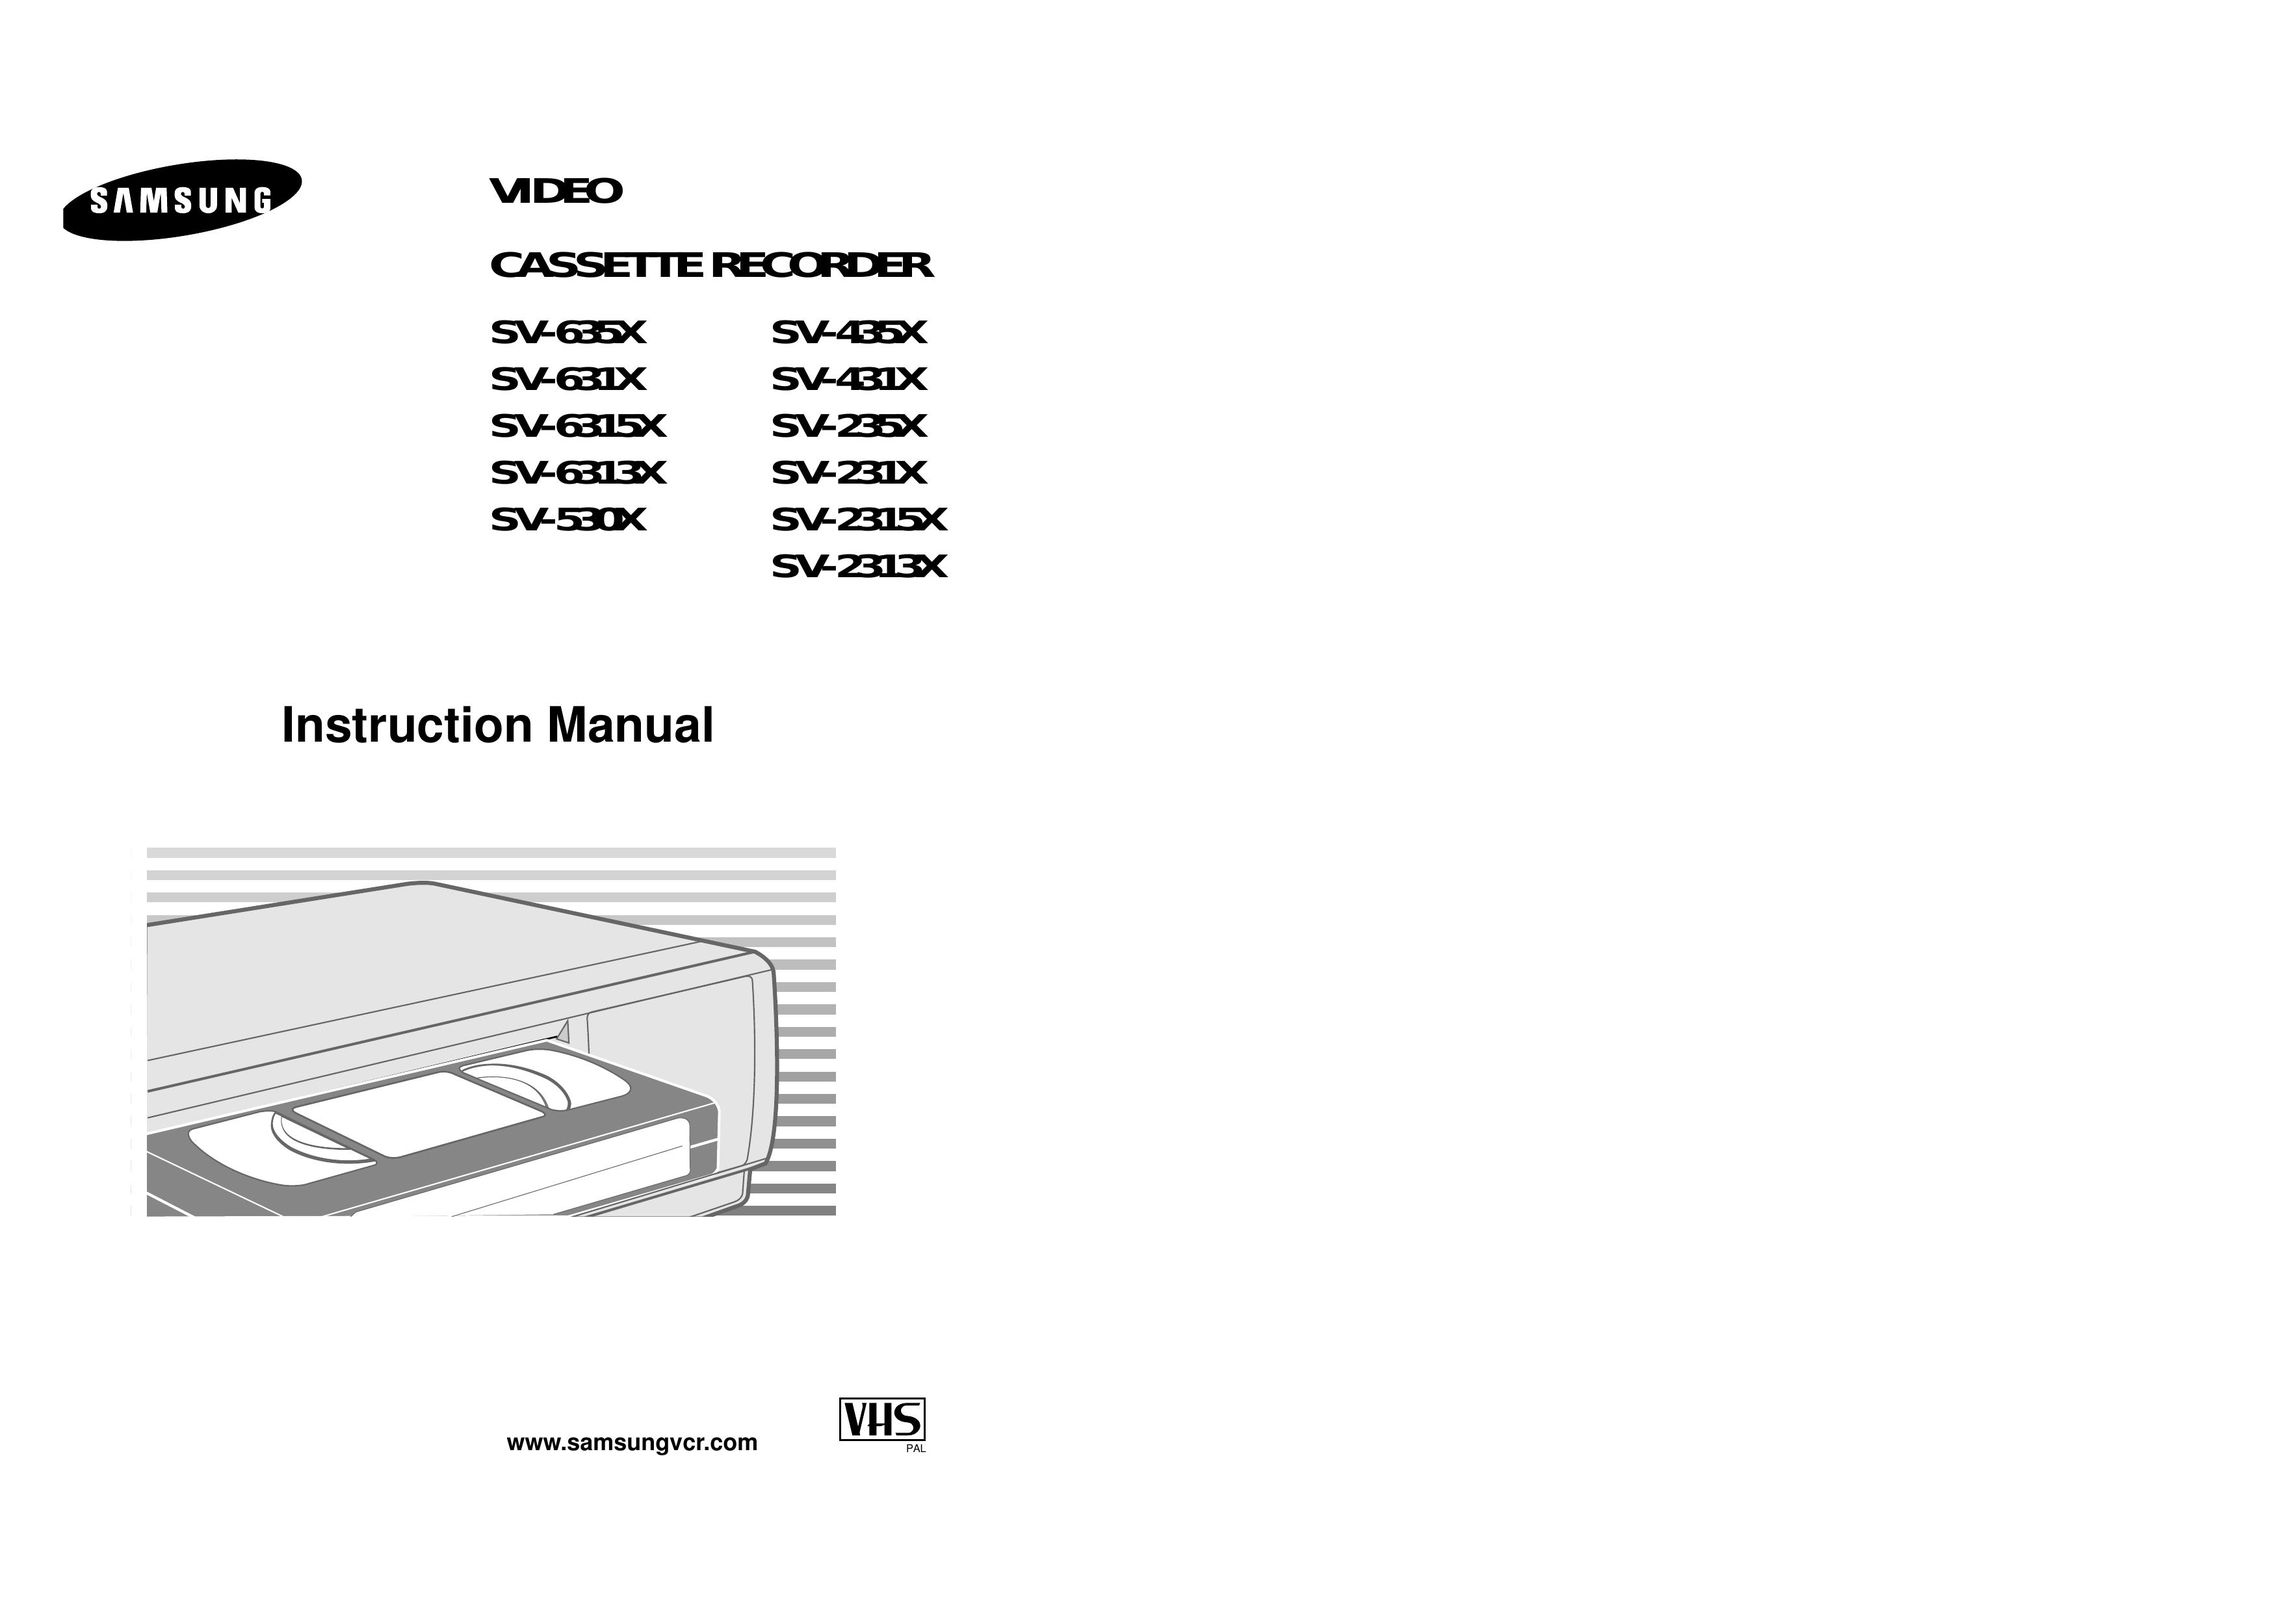 Samsung SV-6313X Cassette Player User Manual